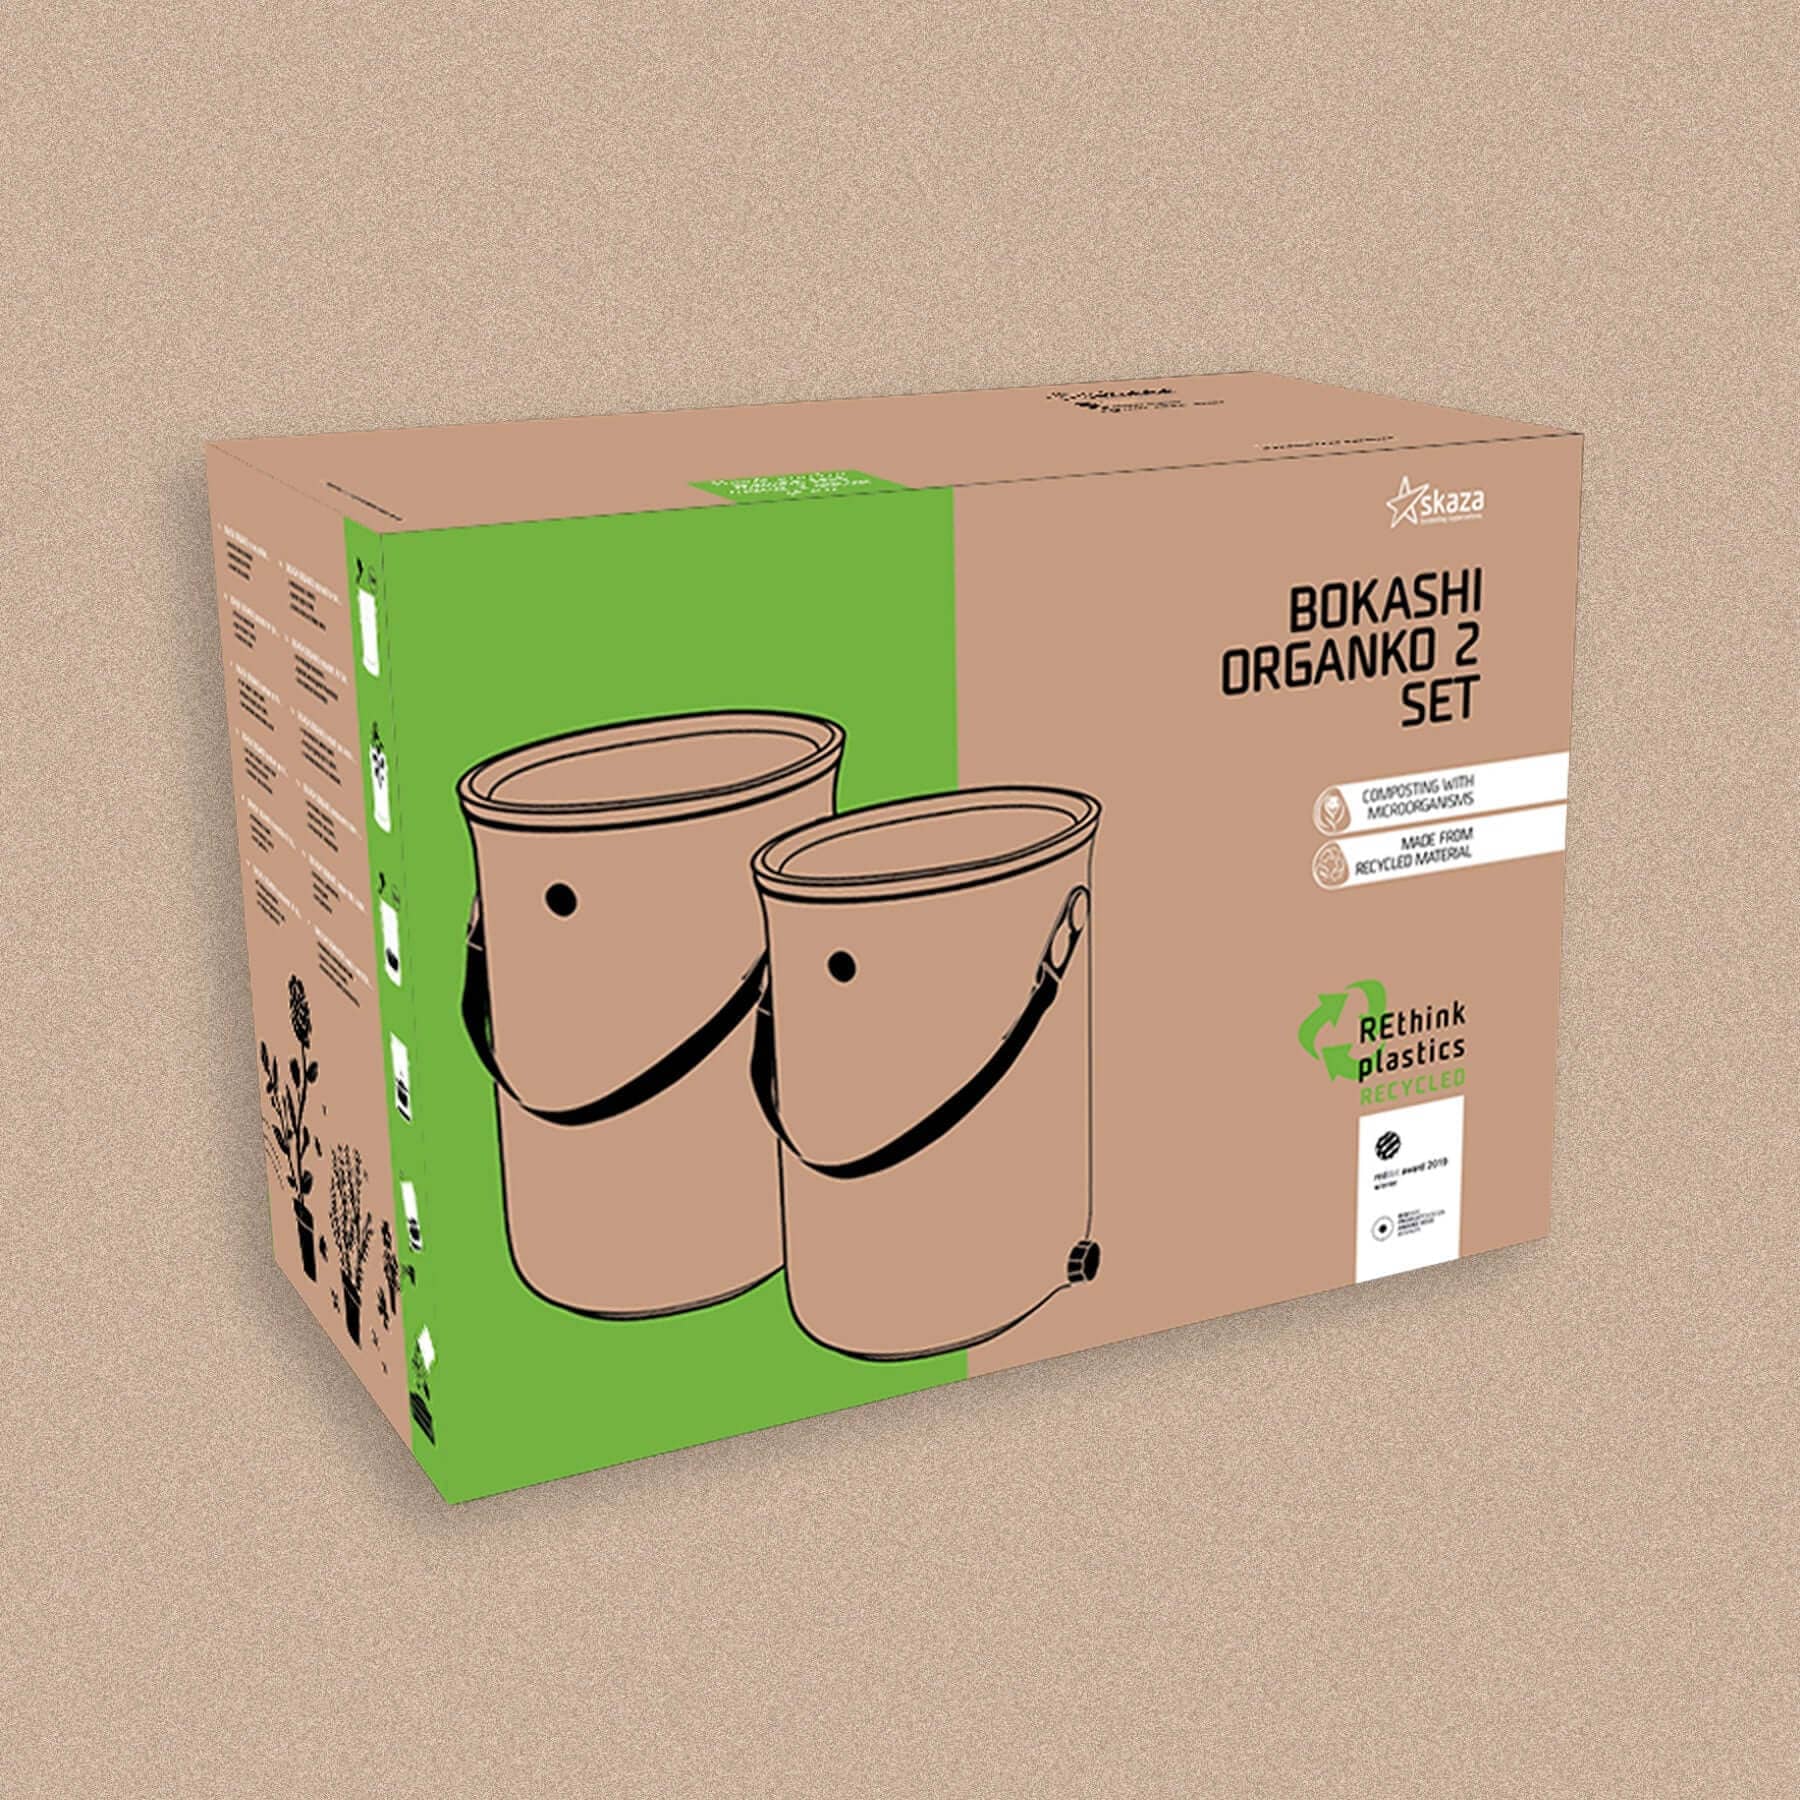 Bokashi Organko 2 köögikomposter cappuccino komplekt 2 x 9,6 L - Koduwärk